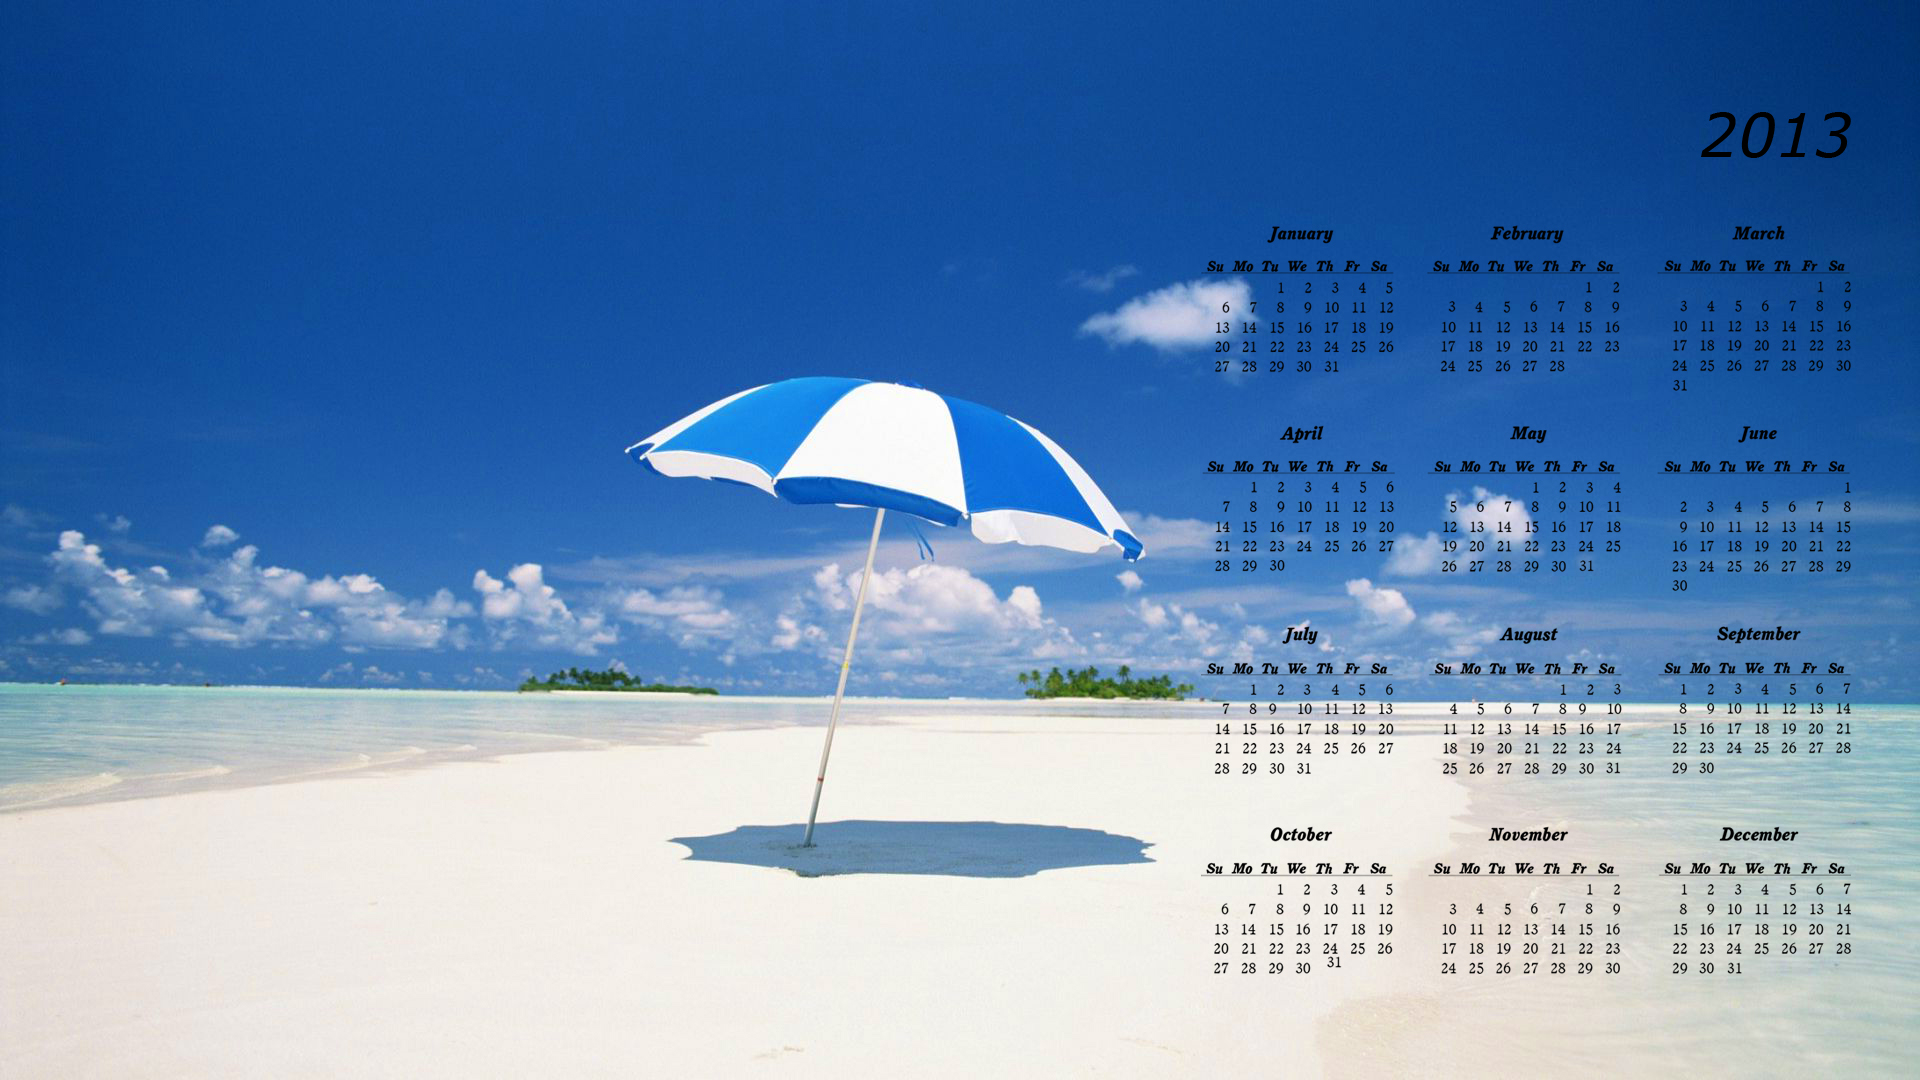 personalised photo desktop calendar